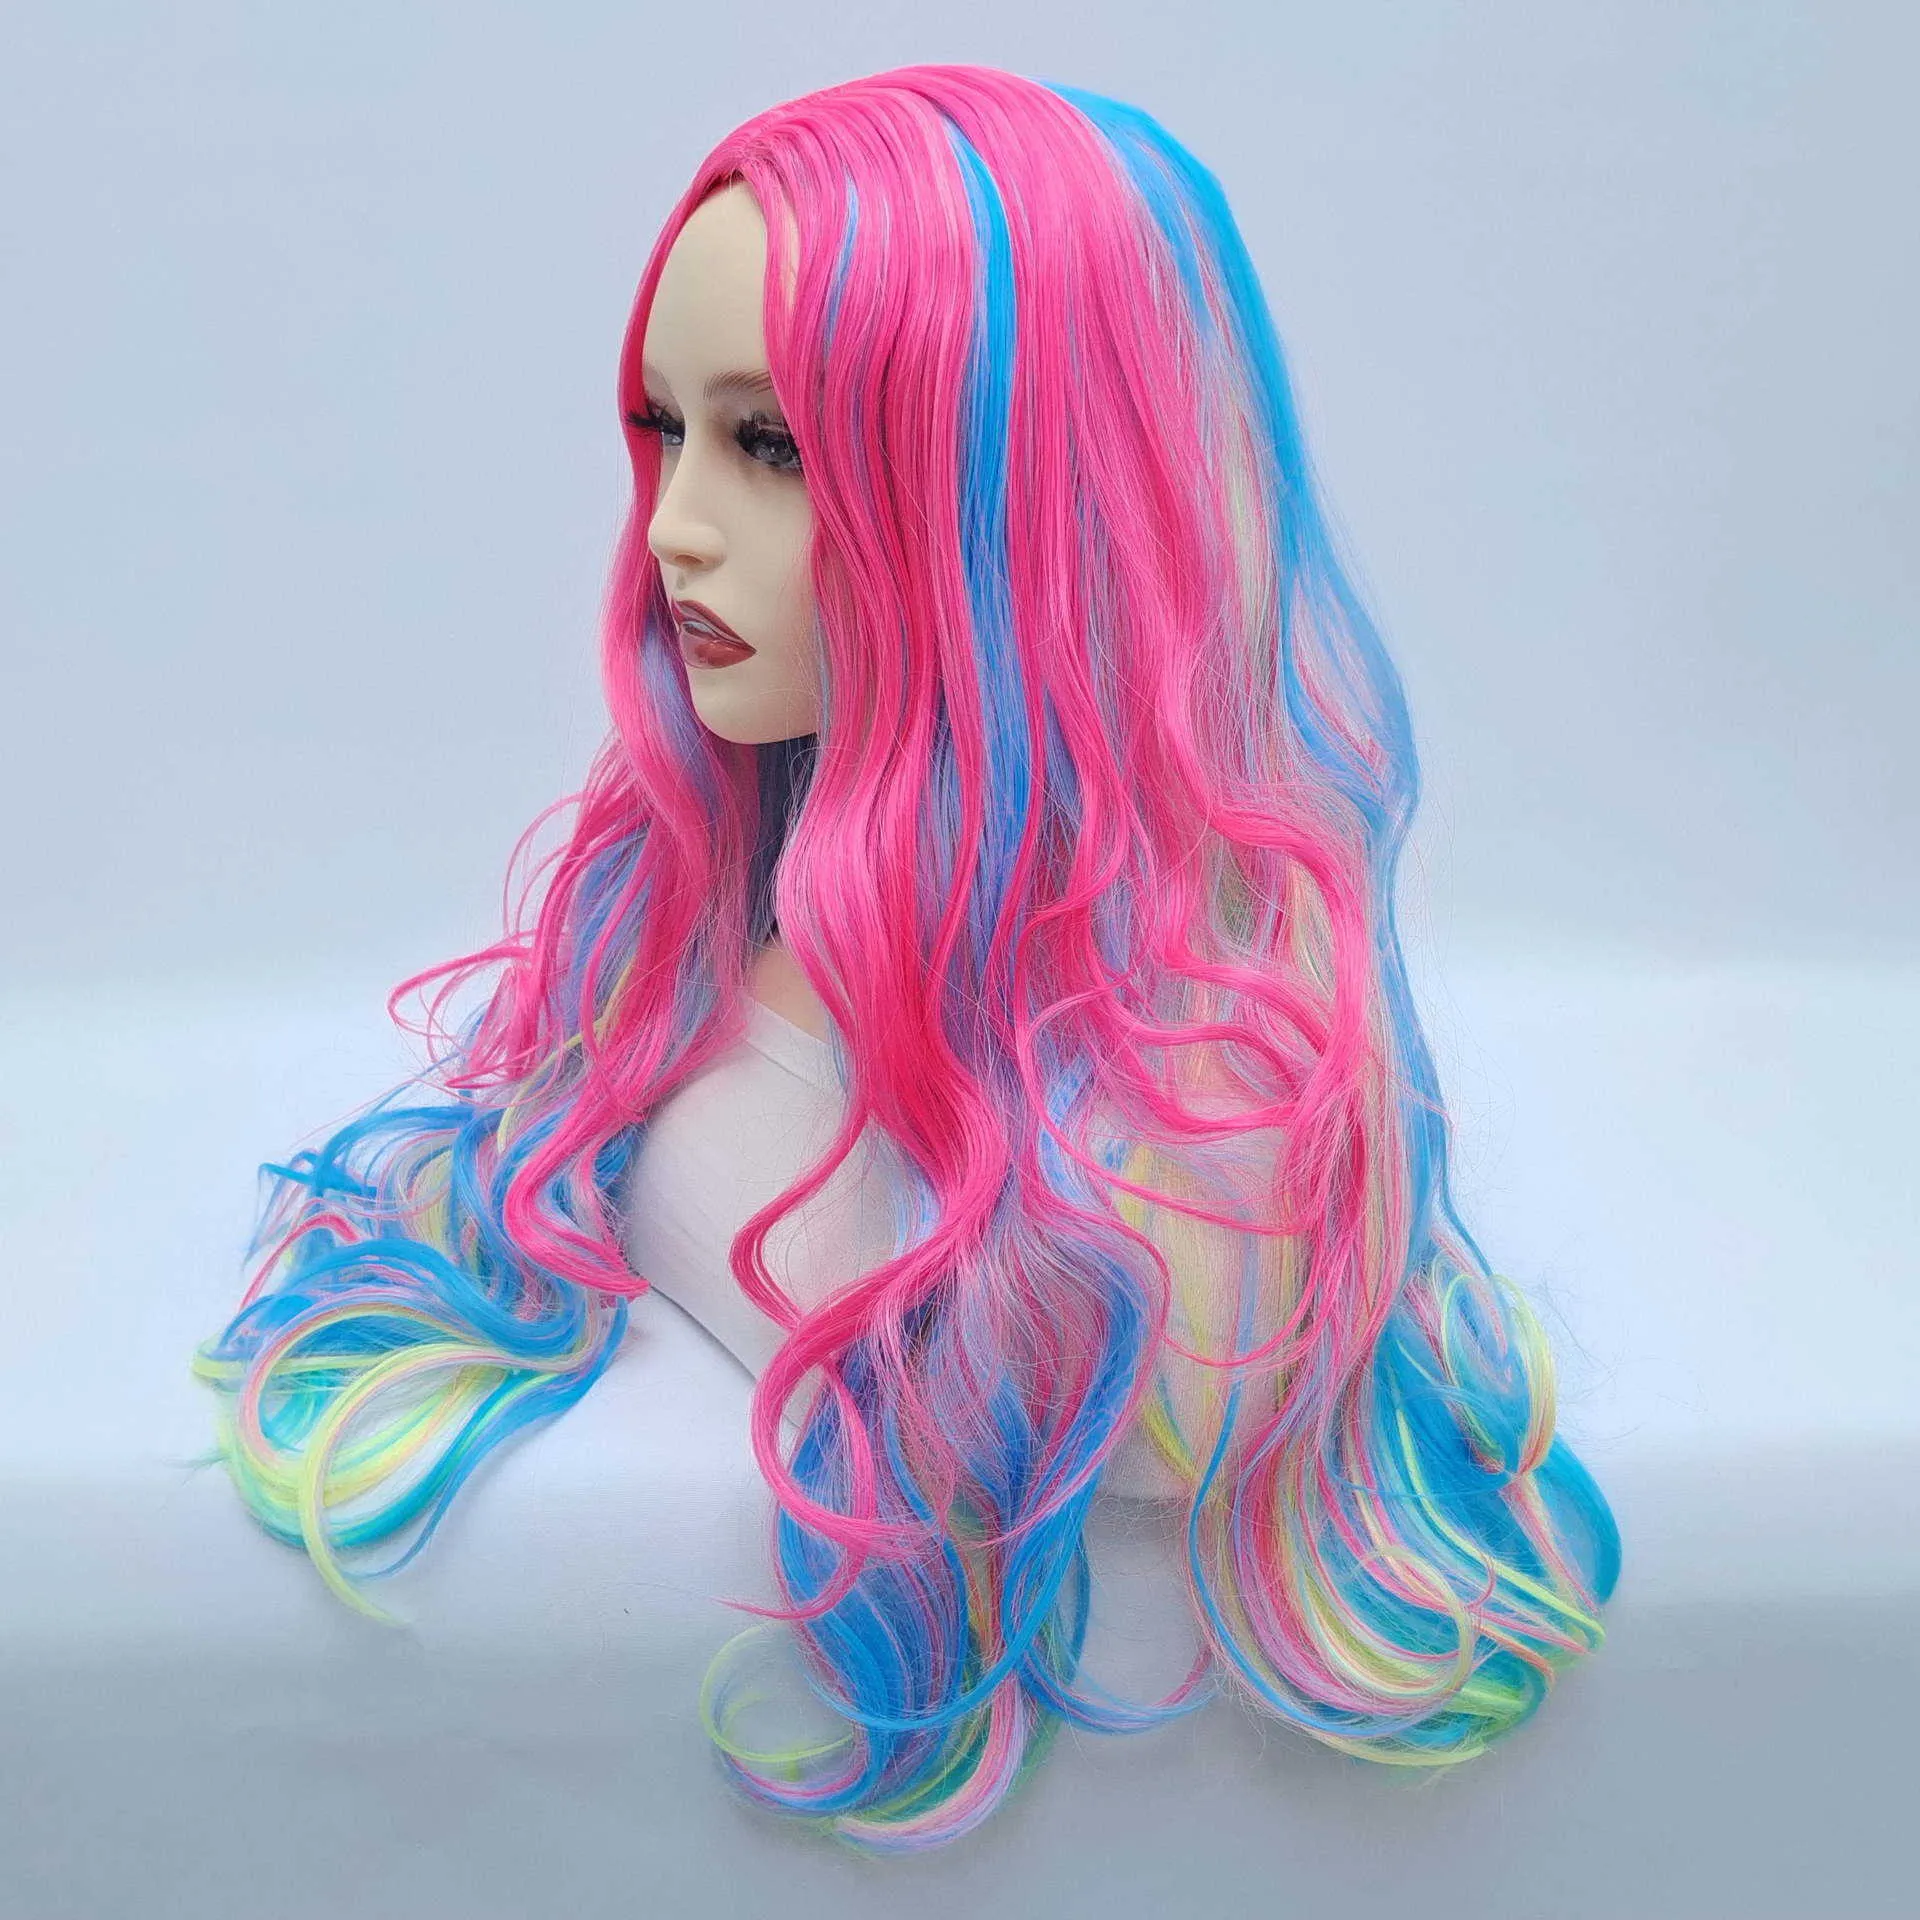 Ge nya peruk flickors långa hår anime peruk lockigt hårfärg trend peruk